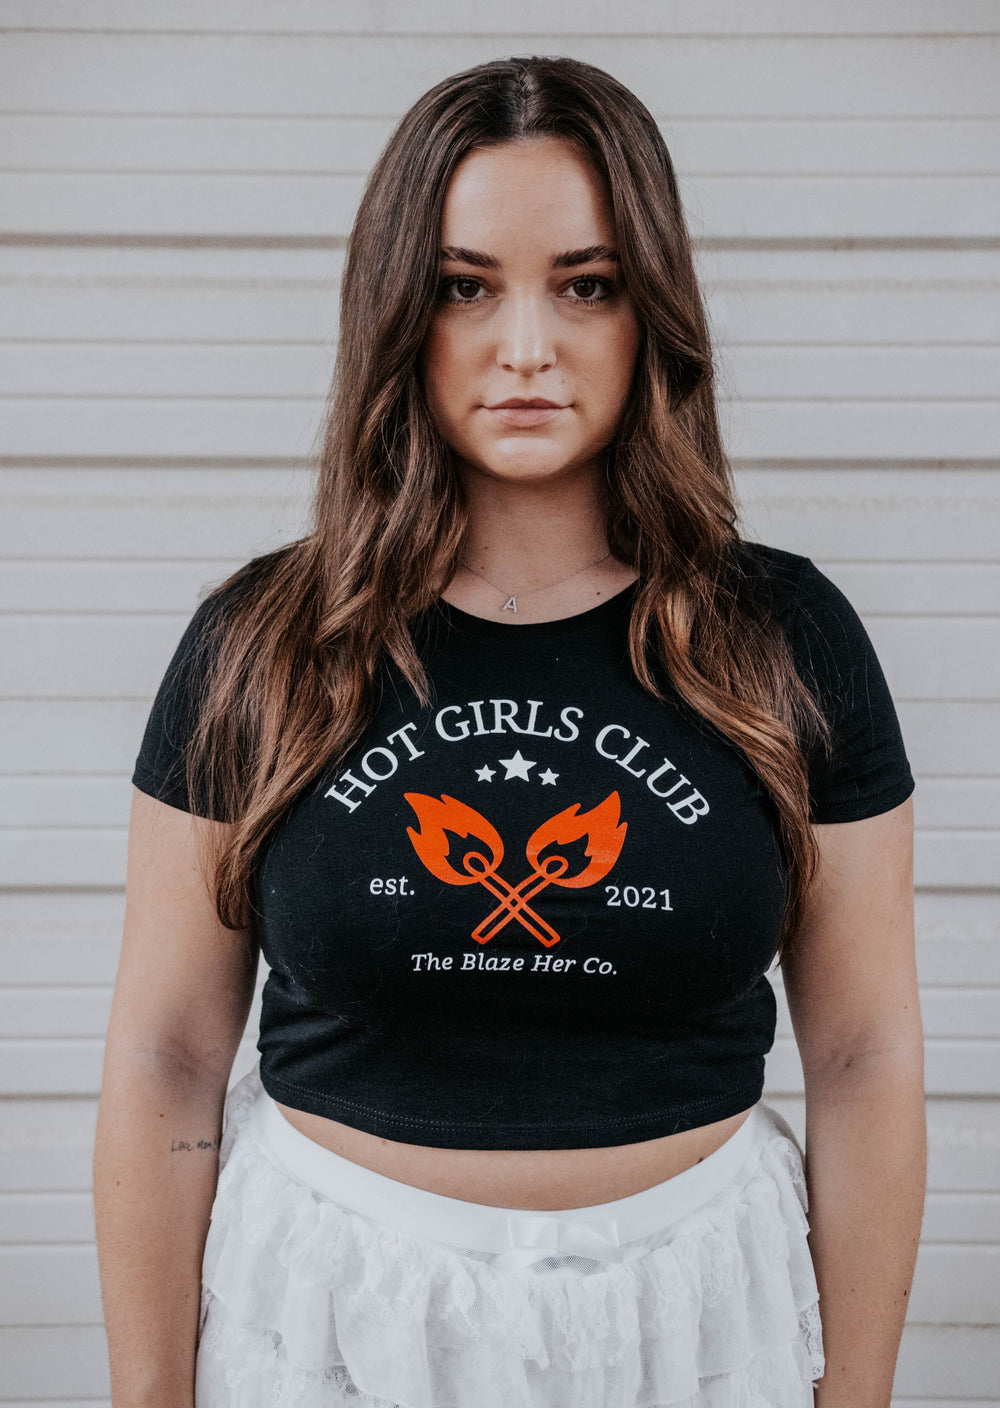 Hot Girls Club Crop Top (Black)